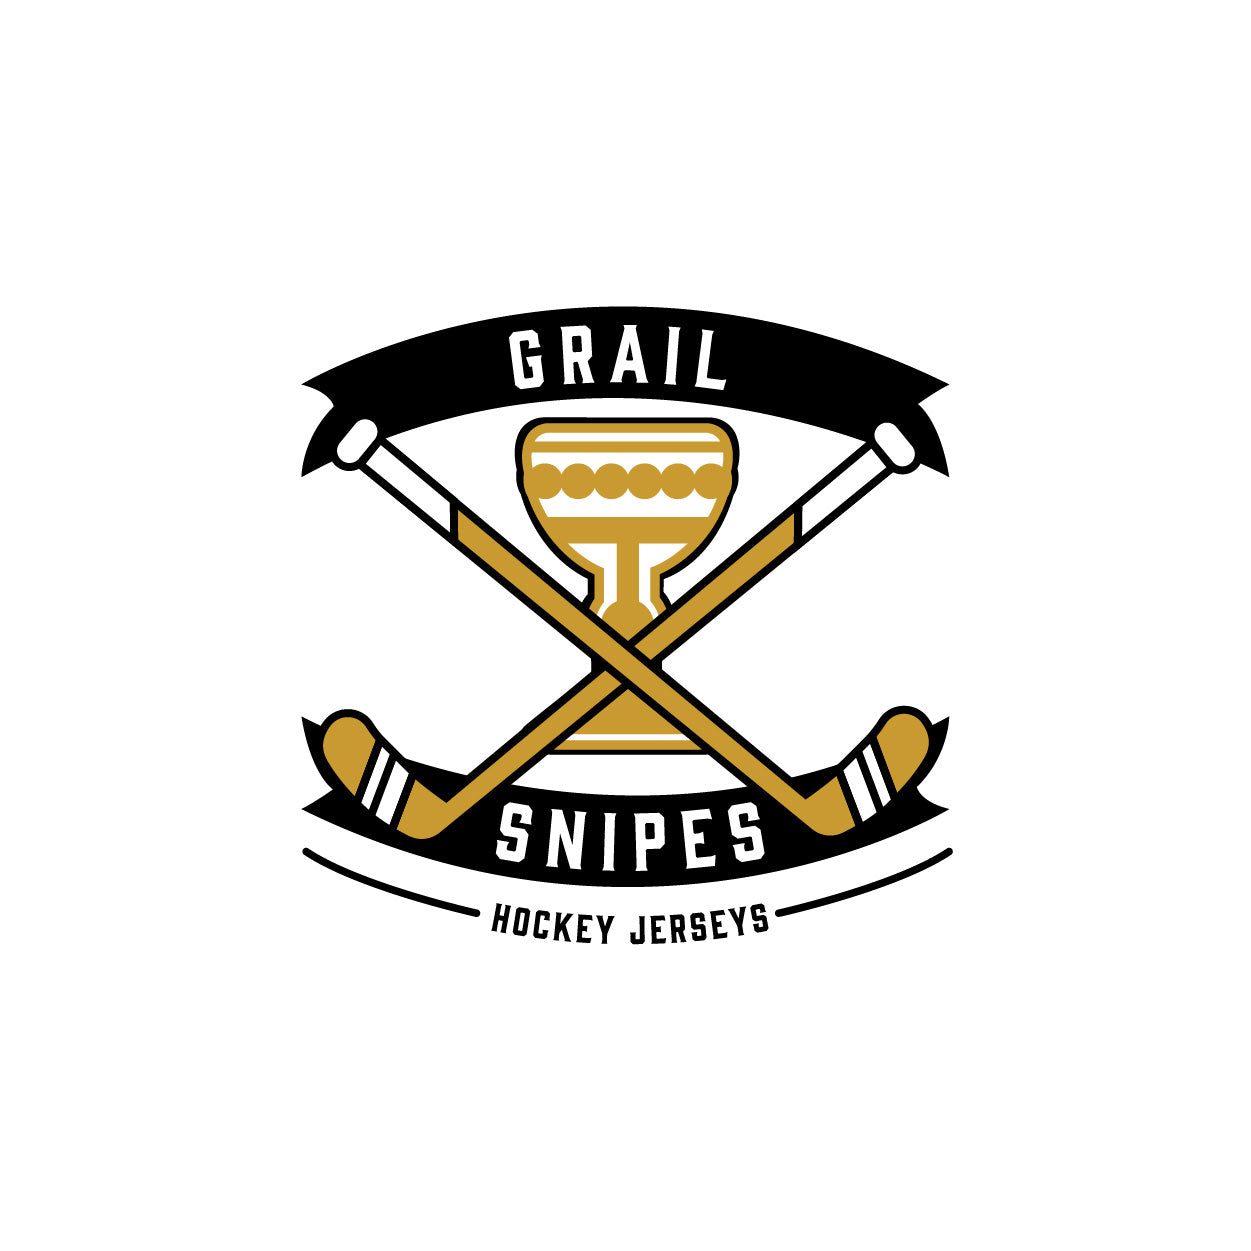 Grail day! NWT Millionaires 2014 Heritage Classic jersey. : r/hockeyjerseys